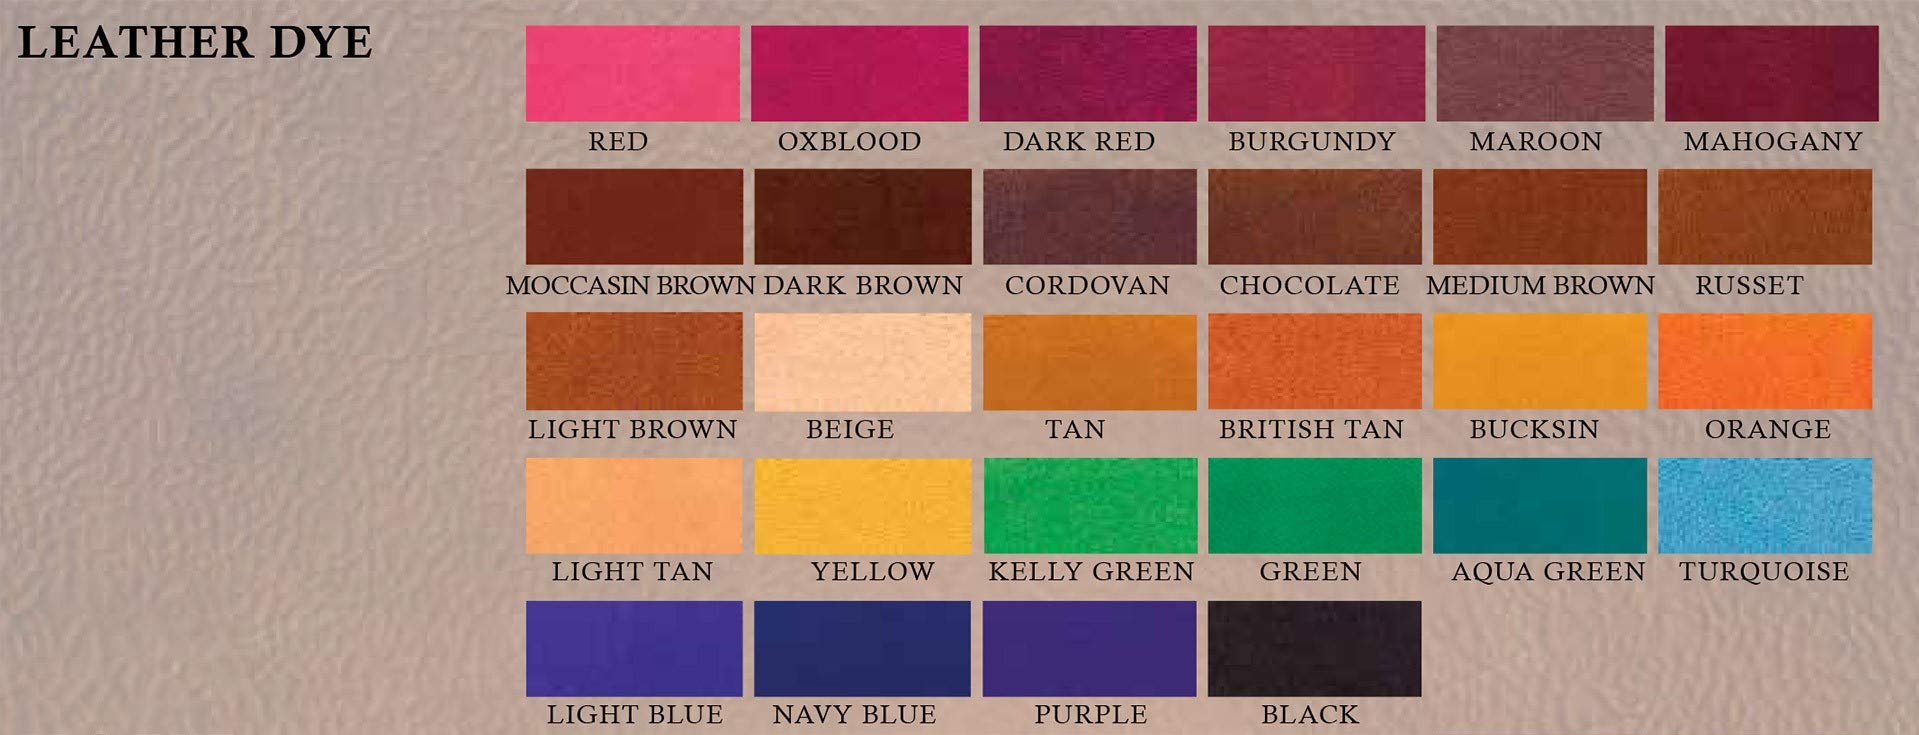 Fiebing's Leather Dye - Alcohol Based Permanent Leather Dye - 4 oz - Kelly Green